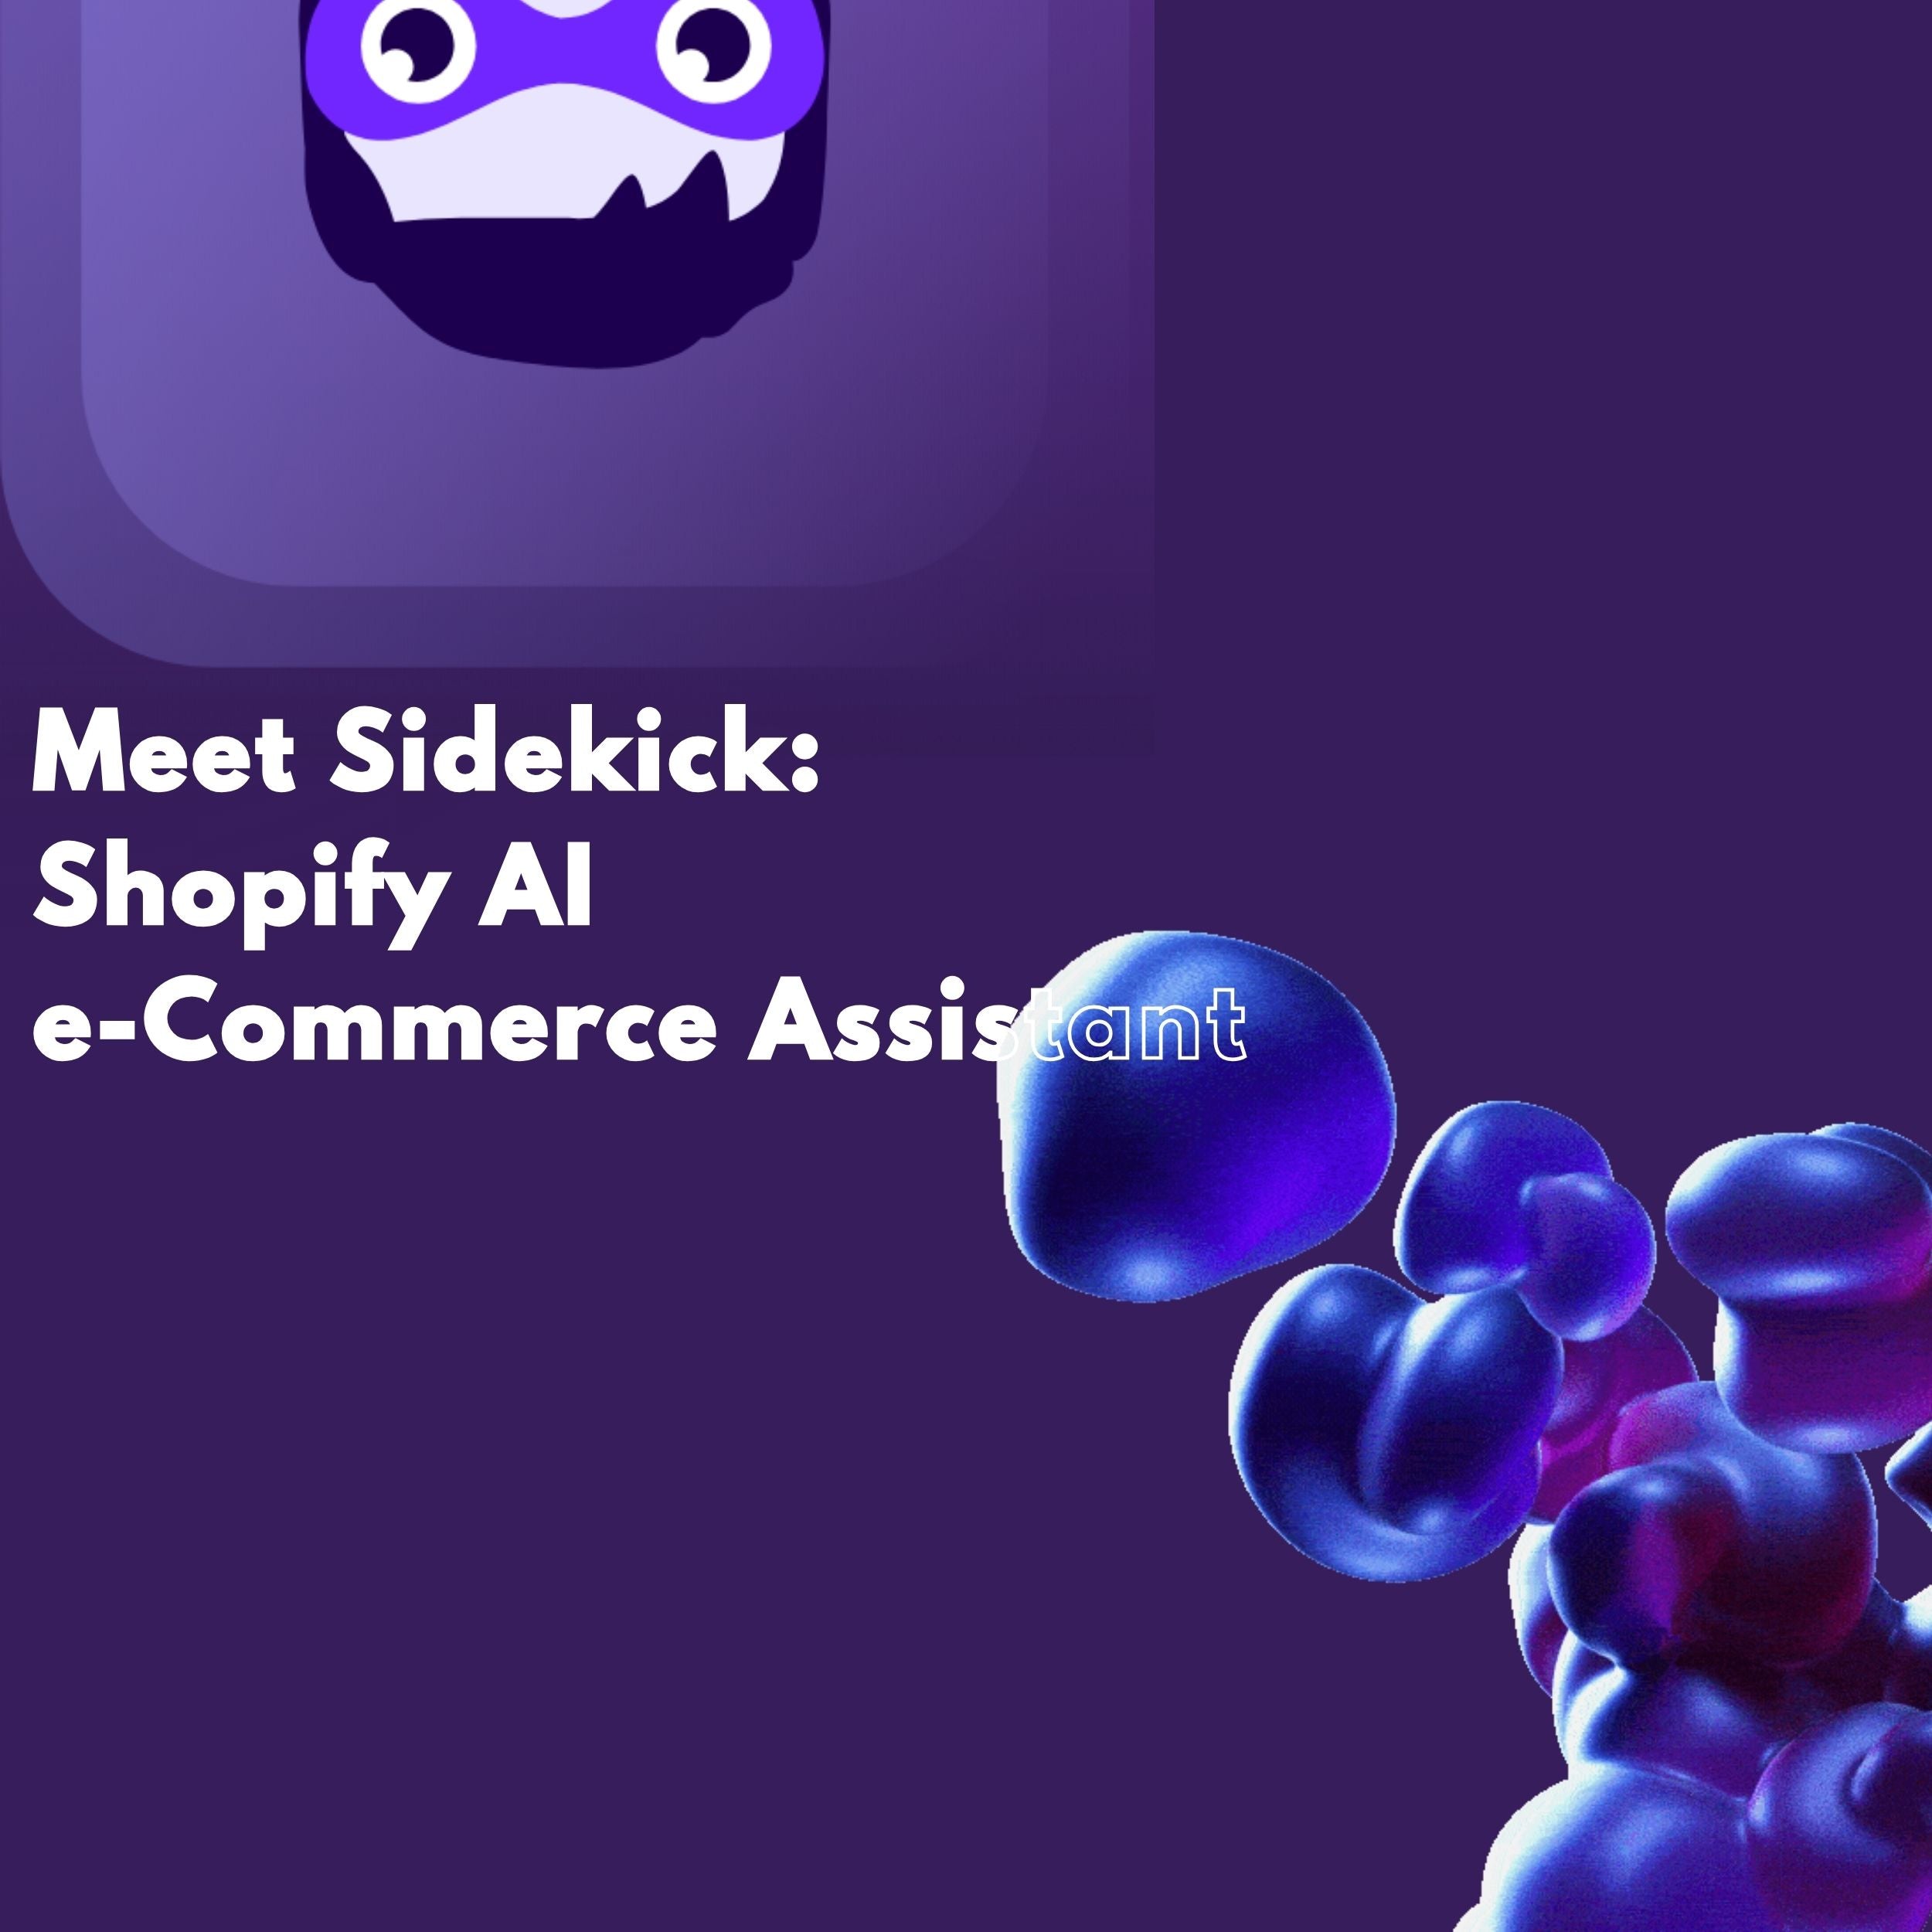 Sidekick: Shopify AI e-Commerce Assistant